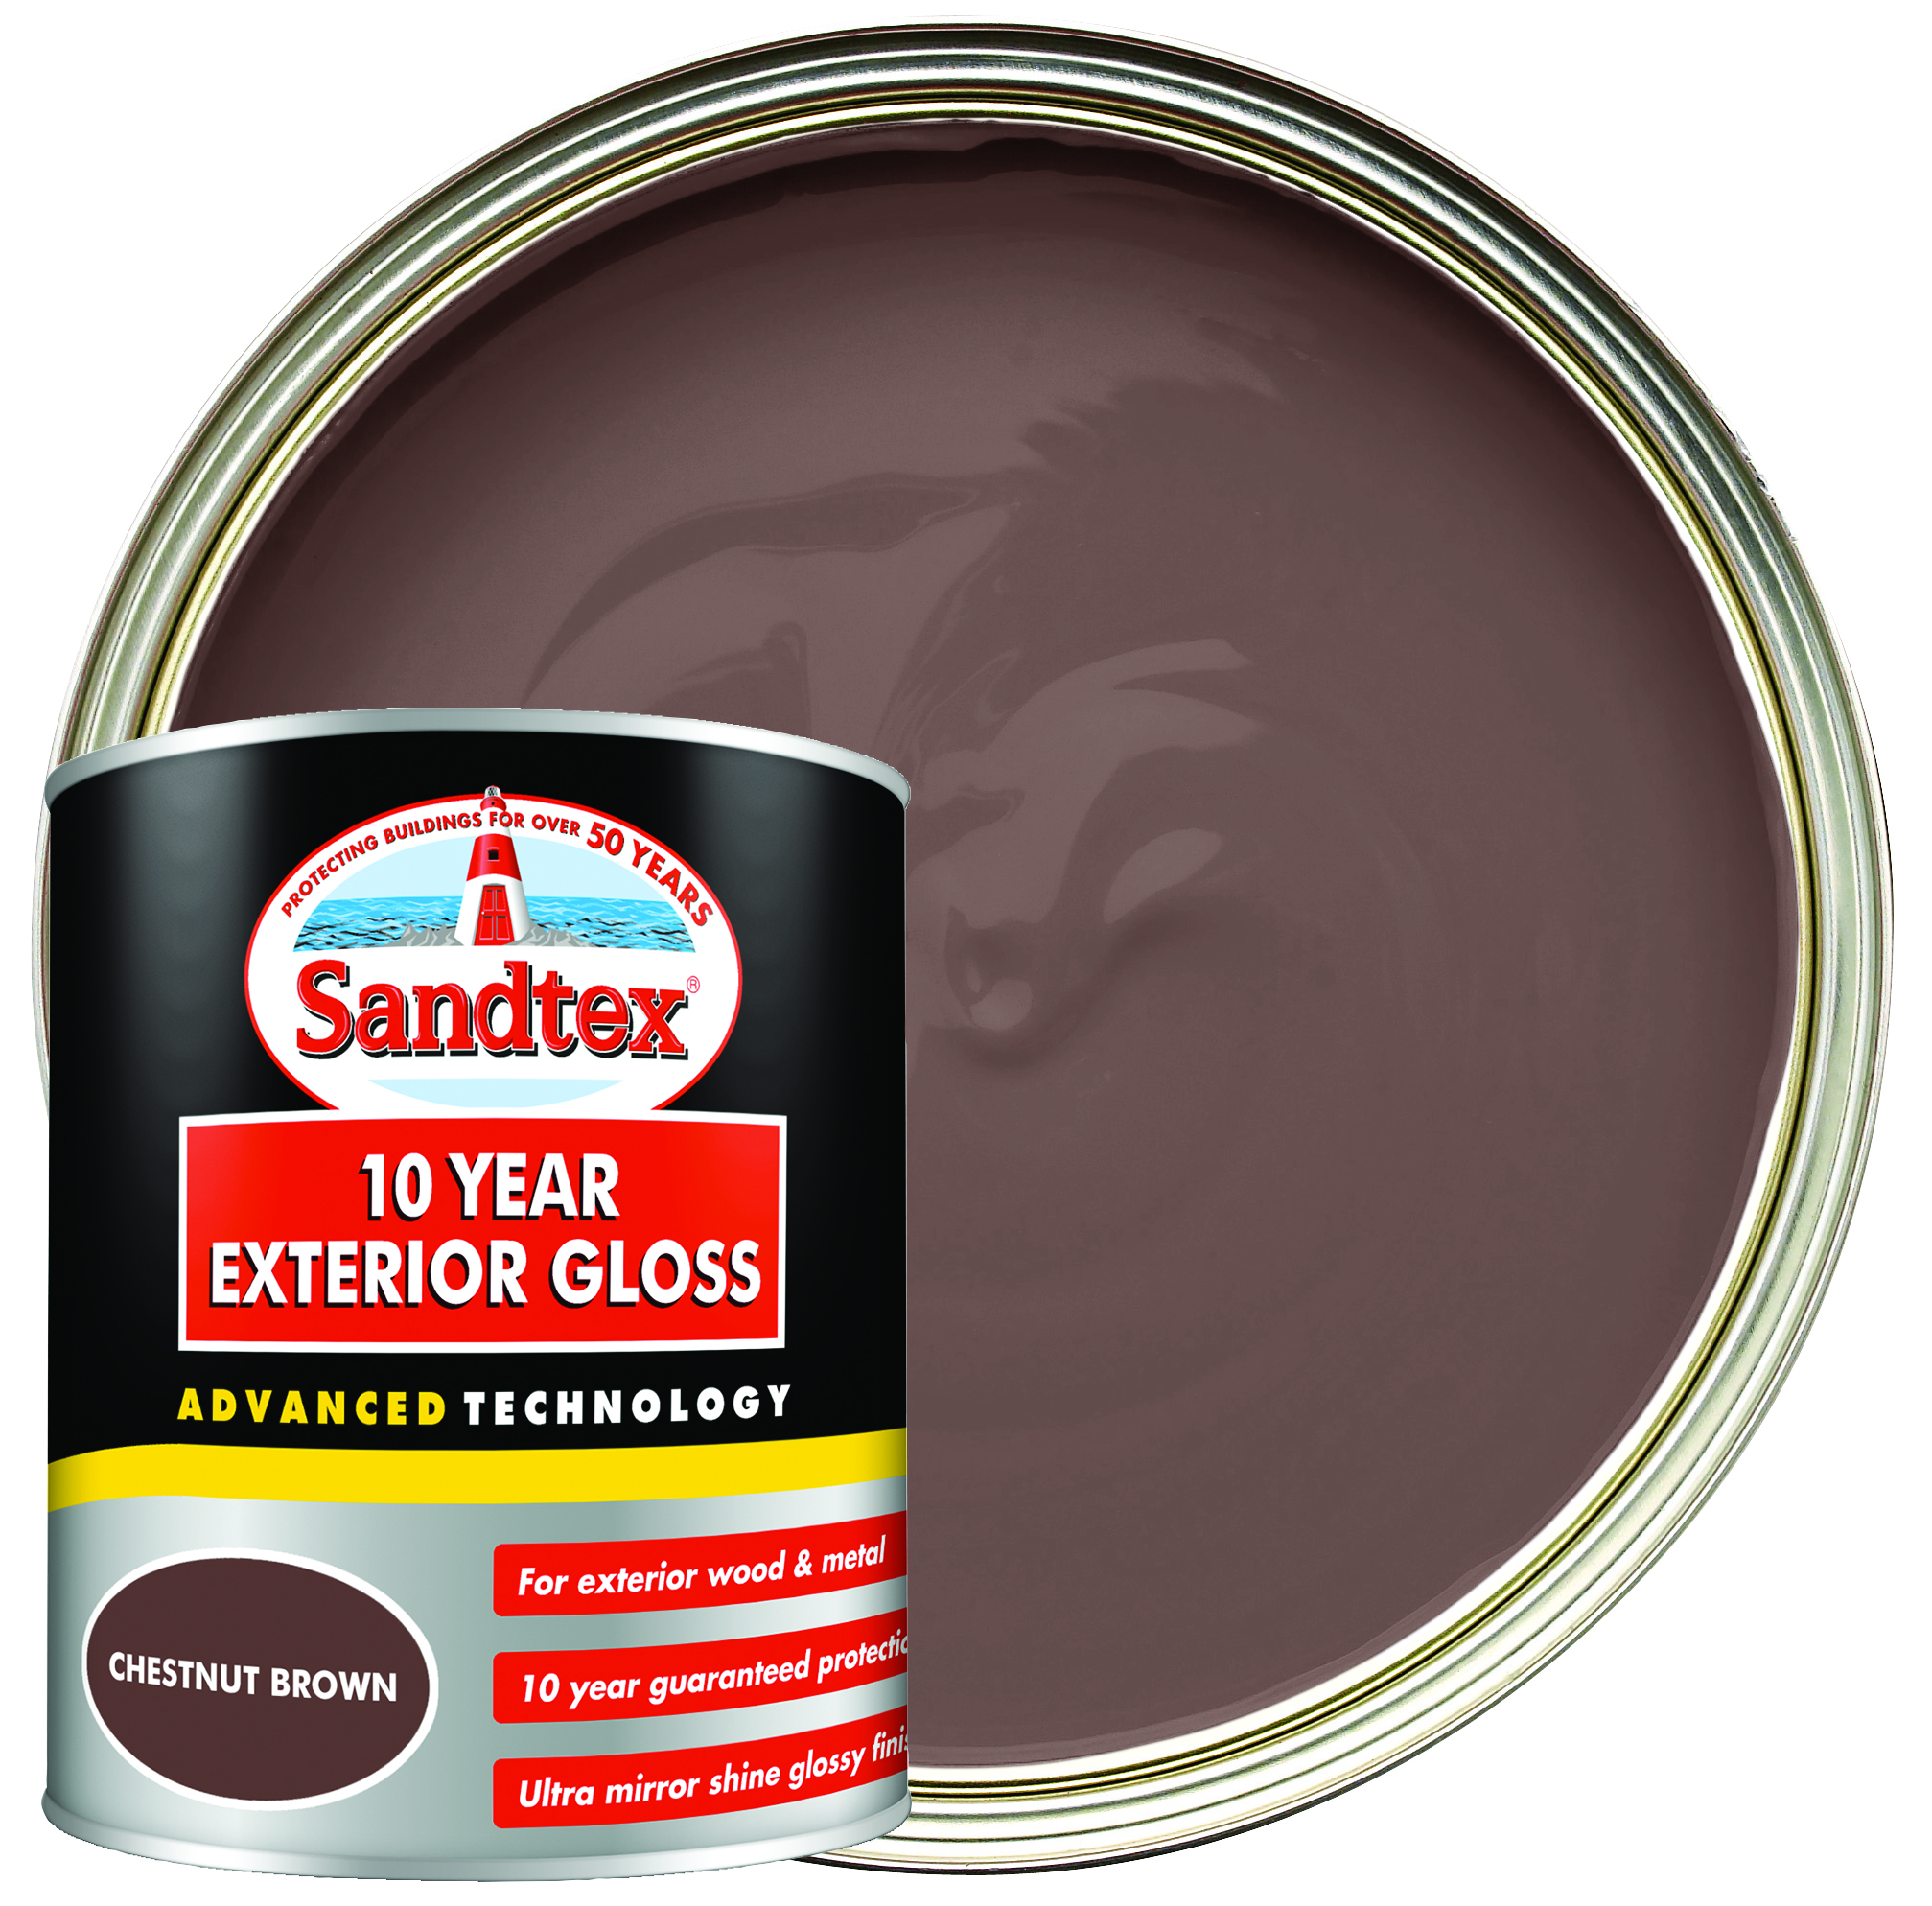 Sandtex 10 Year Exterior Gloss Paint - Chestnut Brown - 750ml